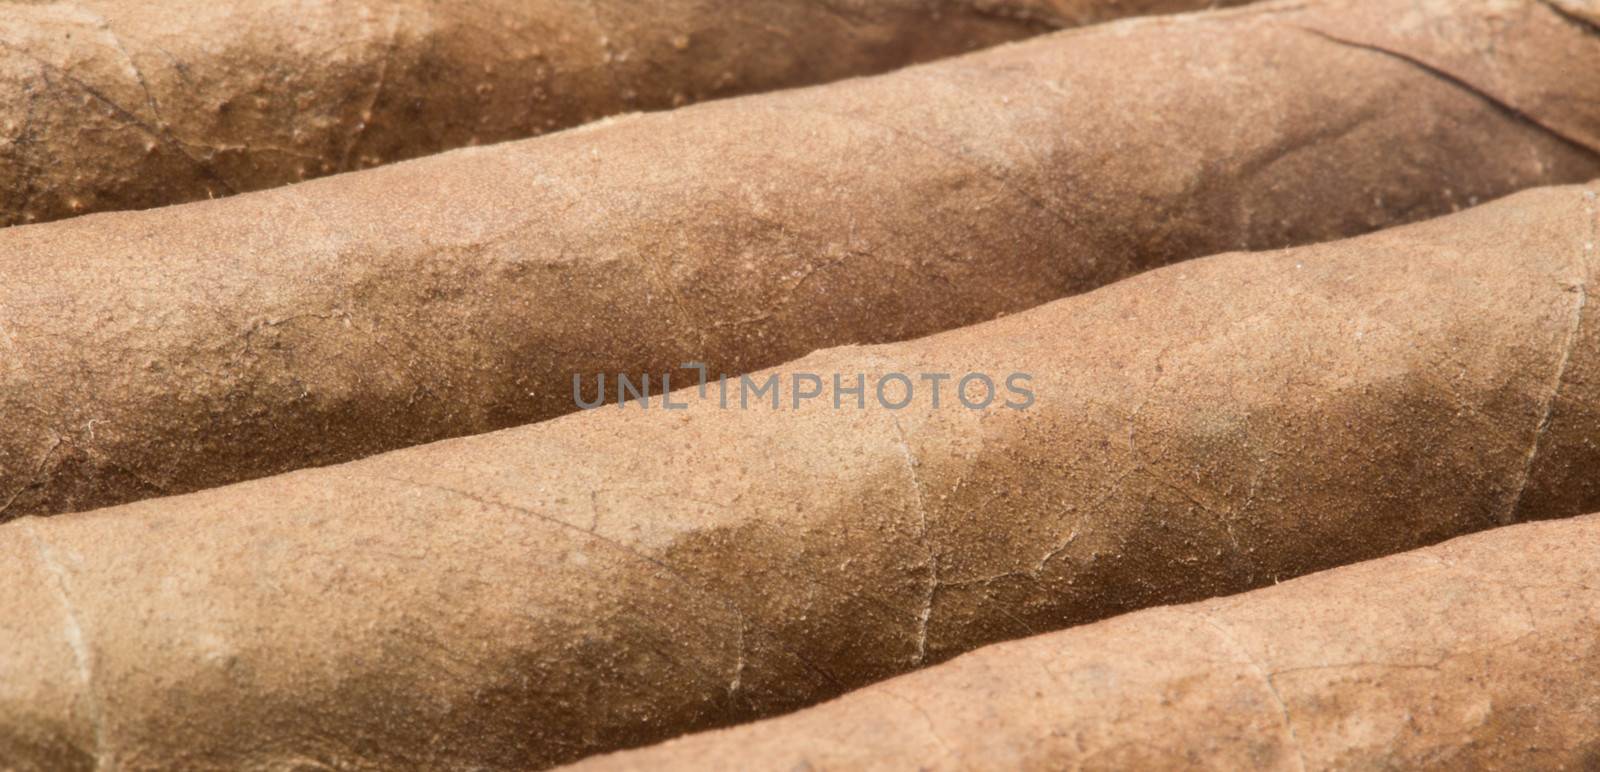 Cigars close up by Wavebreakmedia